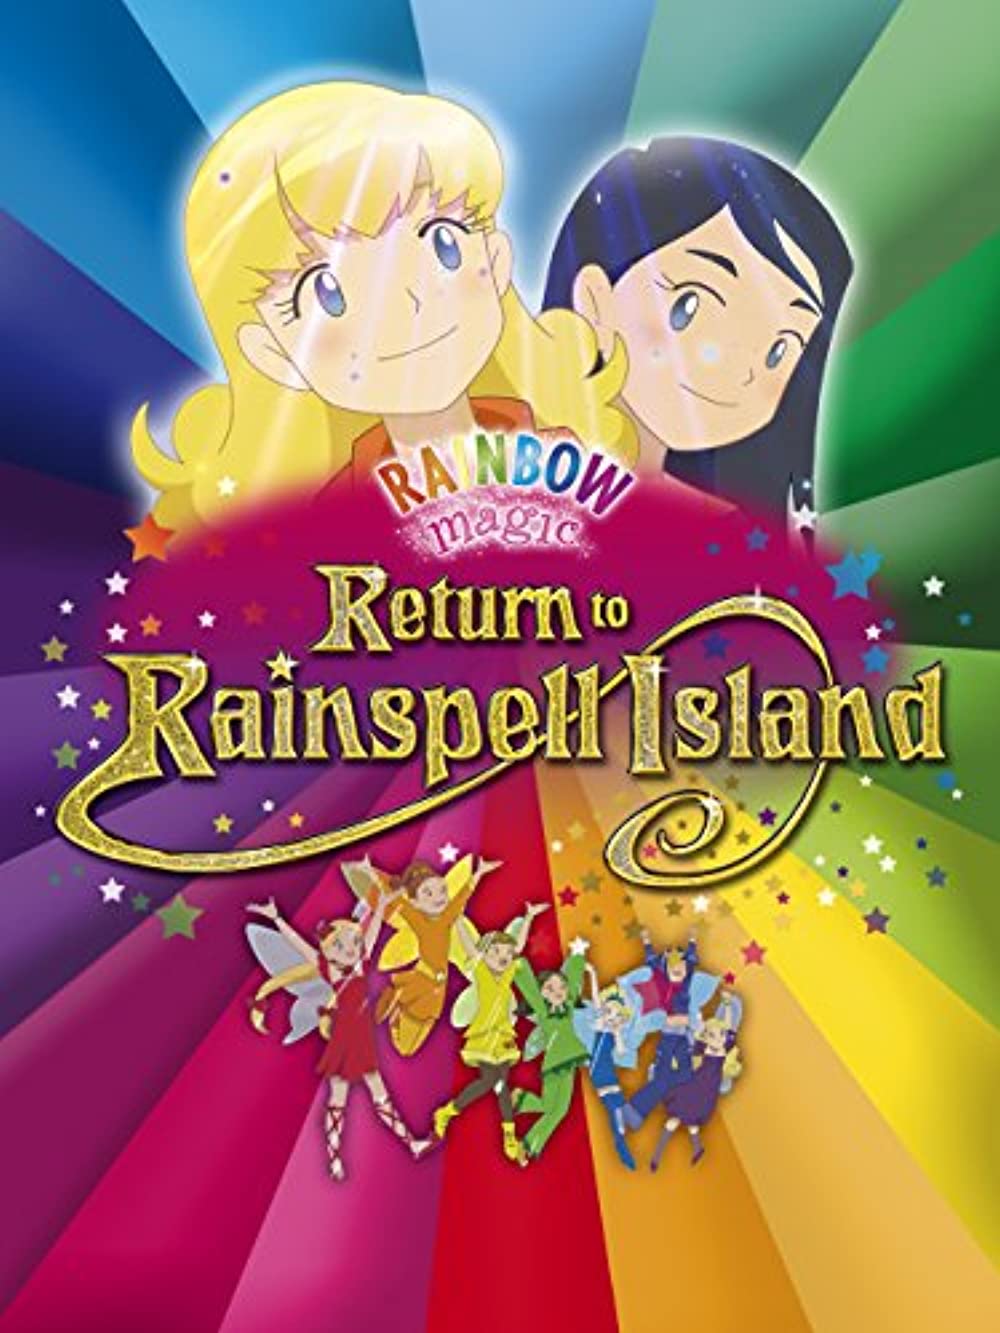 Download Rainbow Magic: Return to Rainspell Island Movie | Rainbow Magic: Return To Rainspell Island Hd, Dvd, Divx